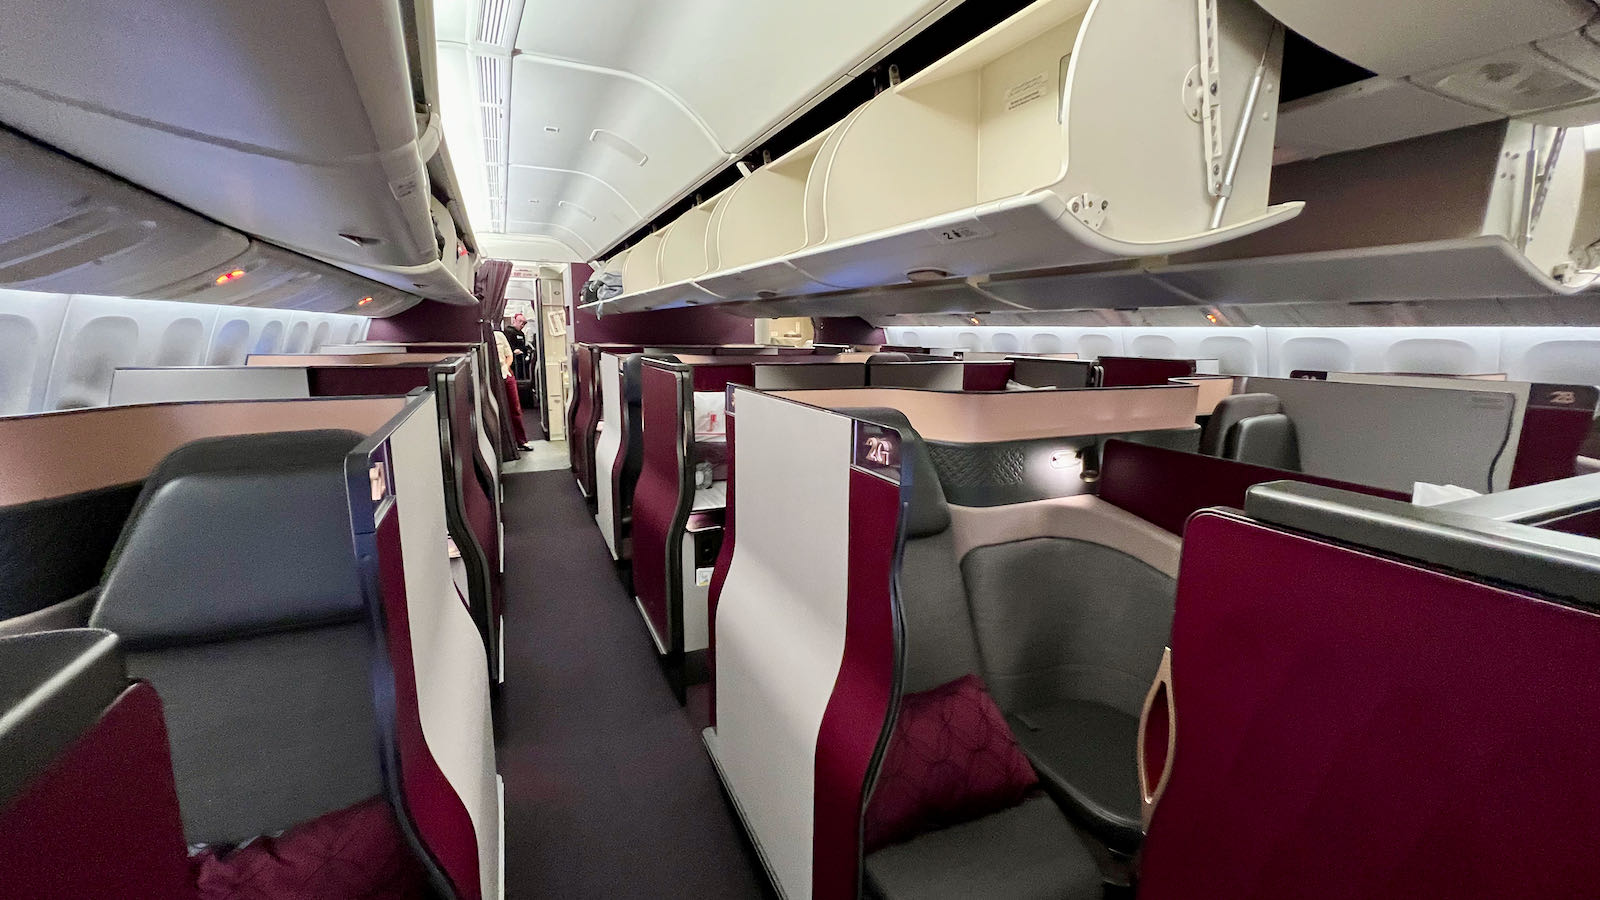 Qatar Airways 777 Business Class cabin